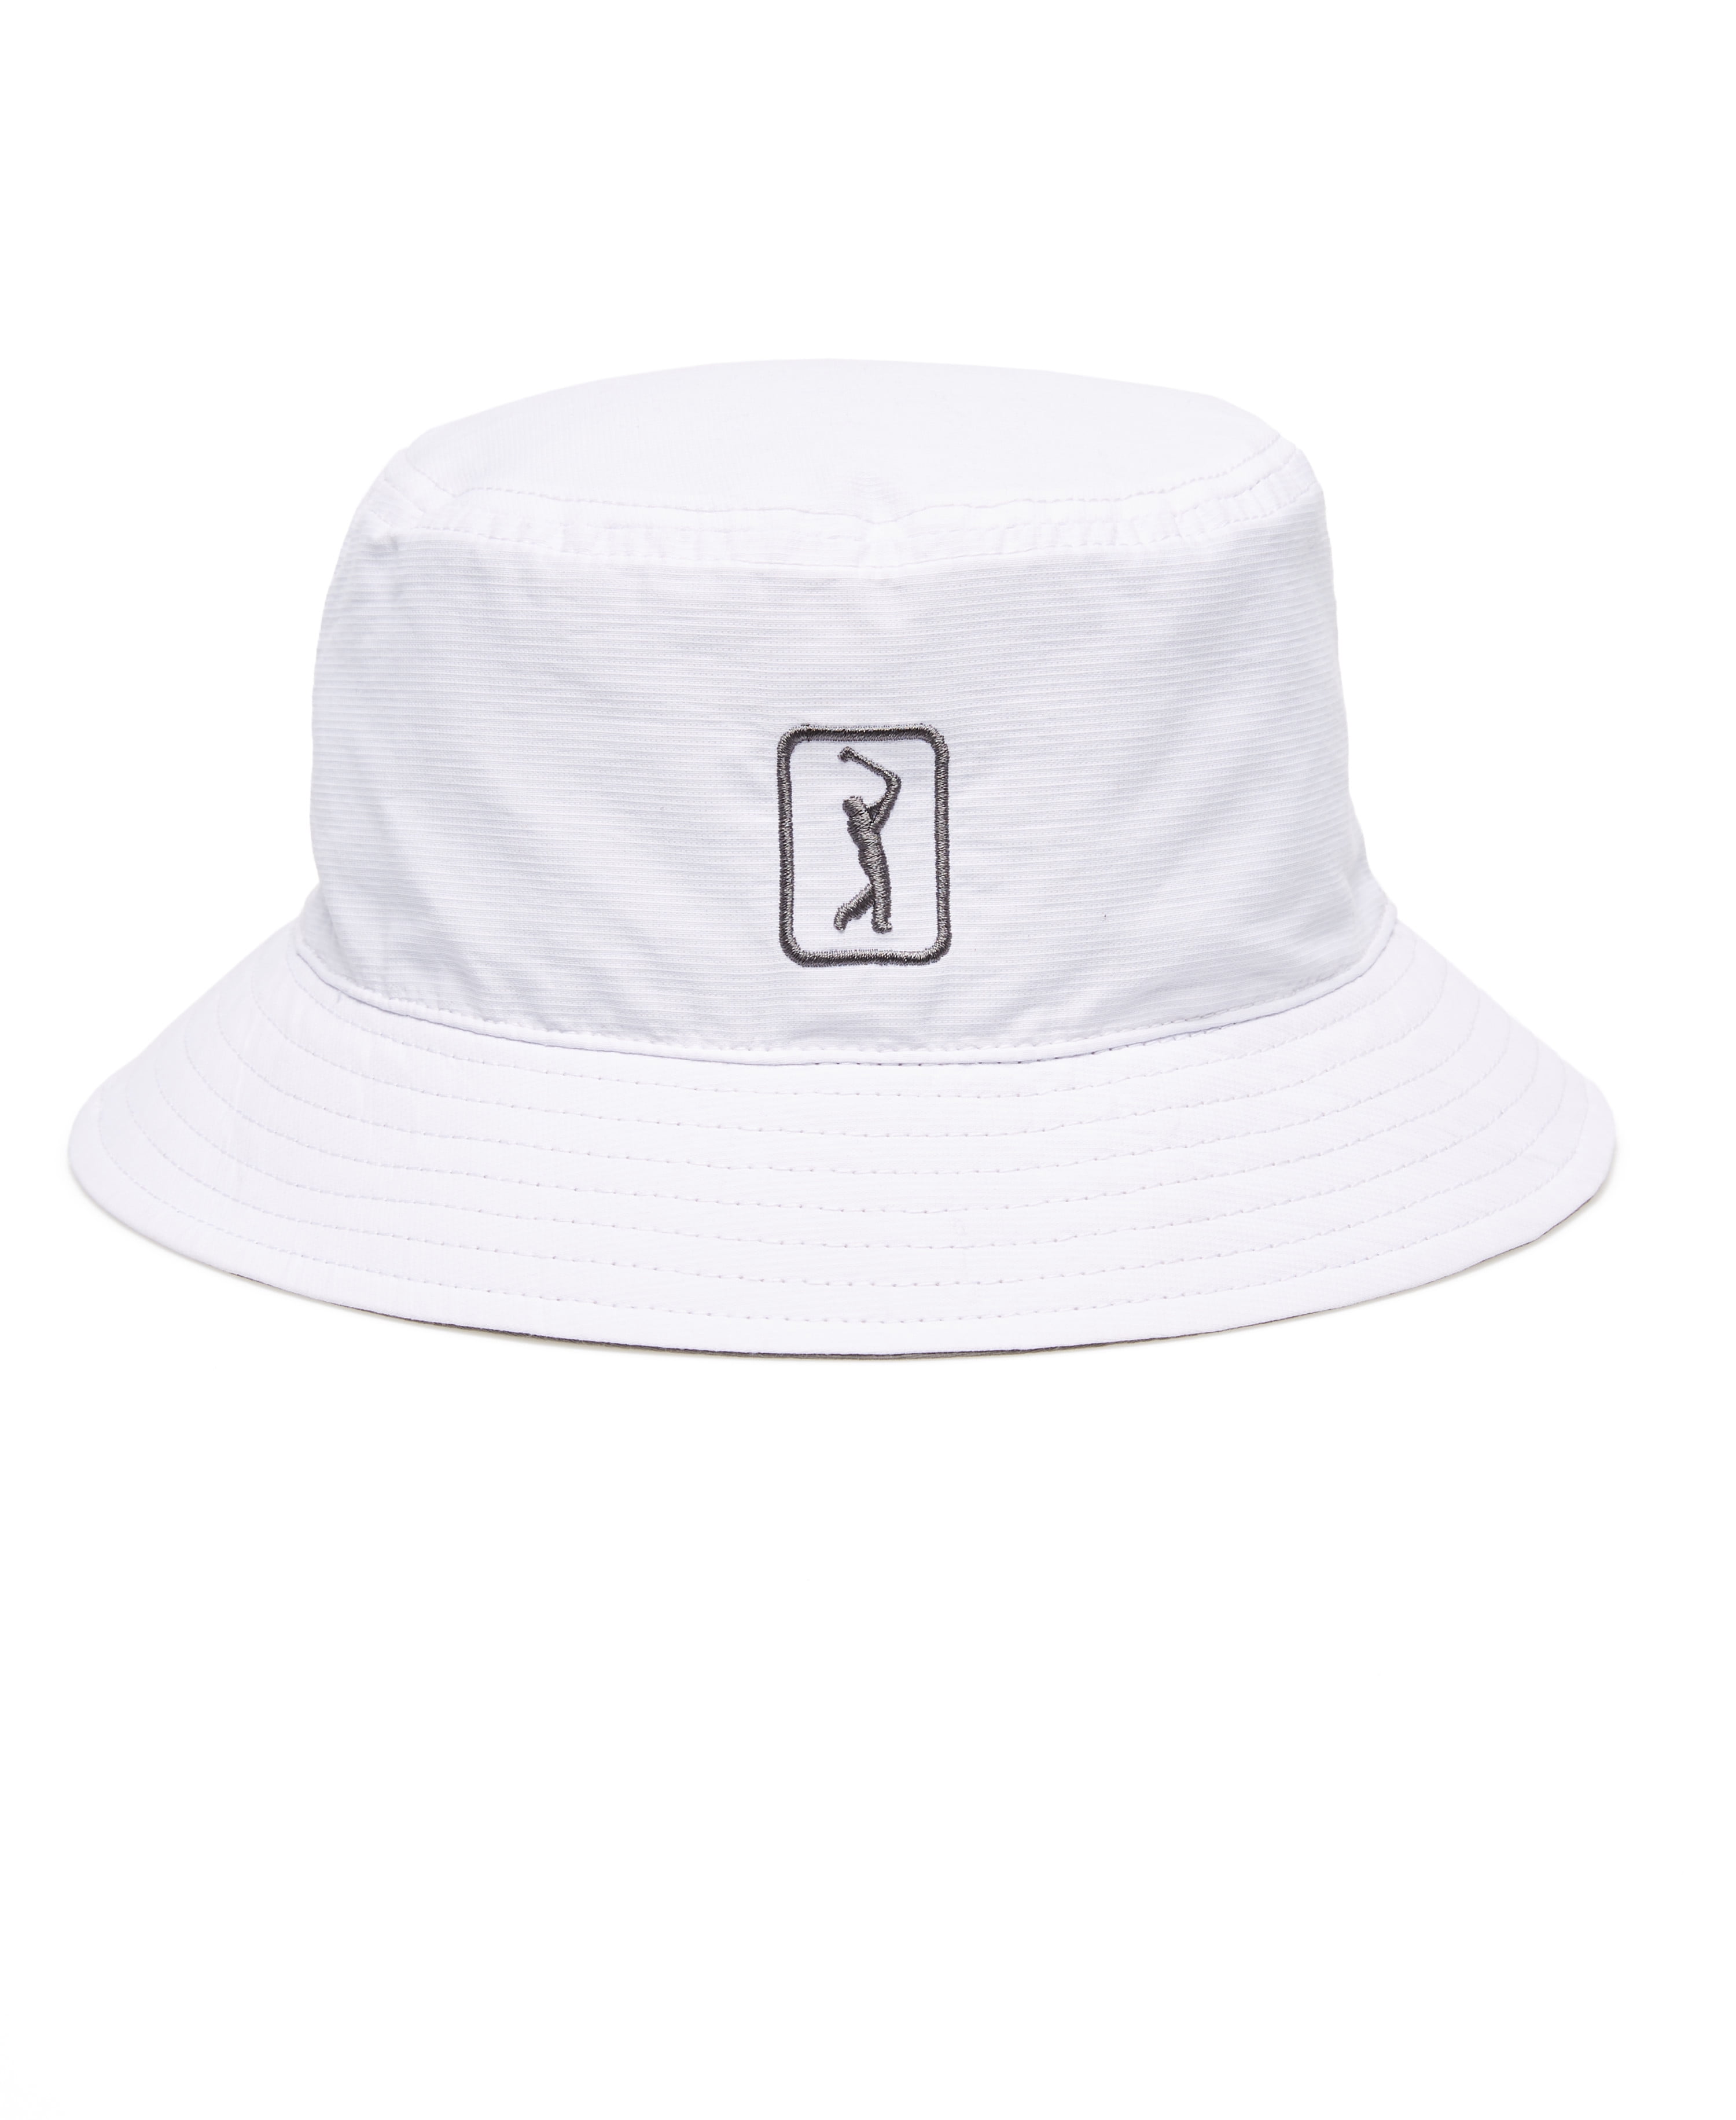 PGA TOUR Golf Reversible Bucket Hat, White/Gray - Walmart.com